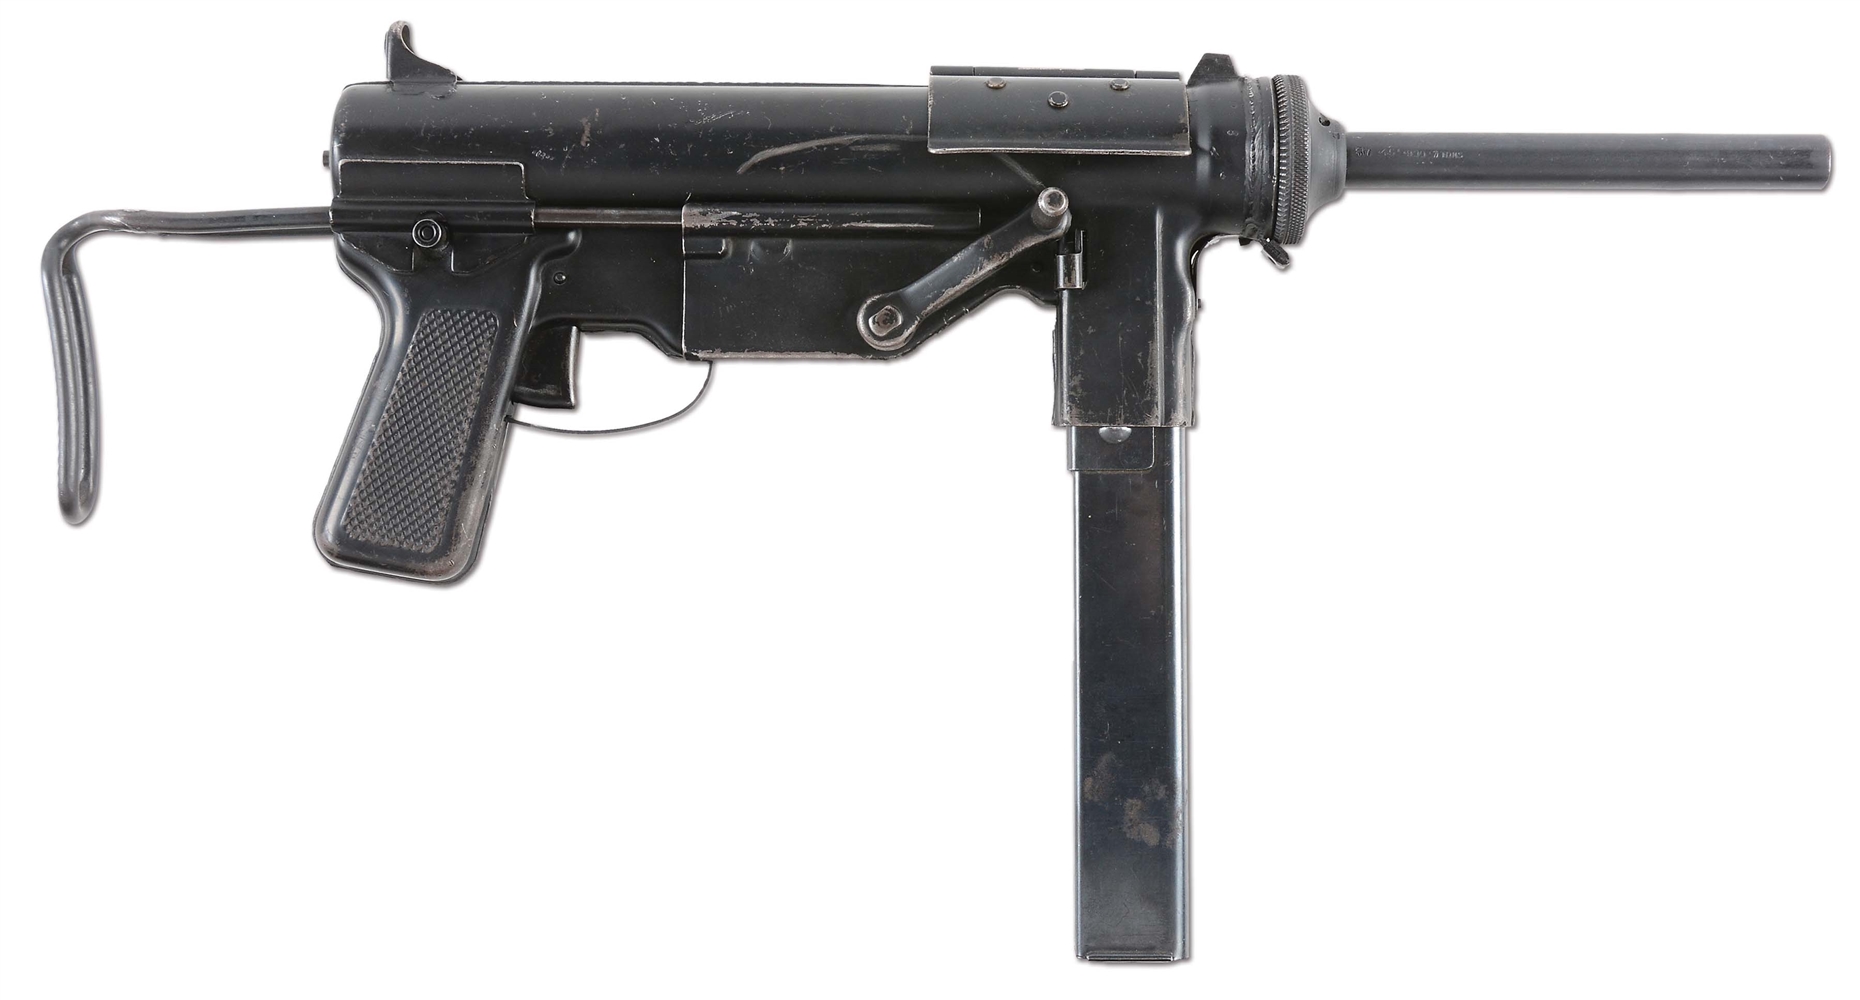 (N) FINE CONDITION GUIDE LAMP M3 "GREASE GUN" MACHINE GUN (CURIO AND RELIC).